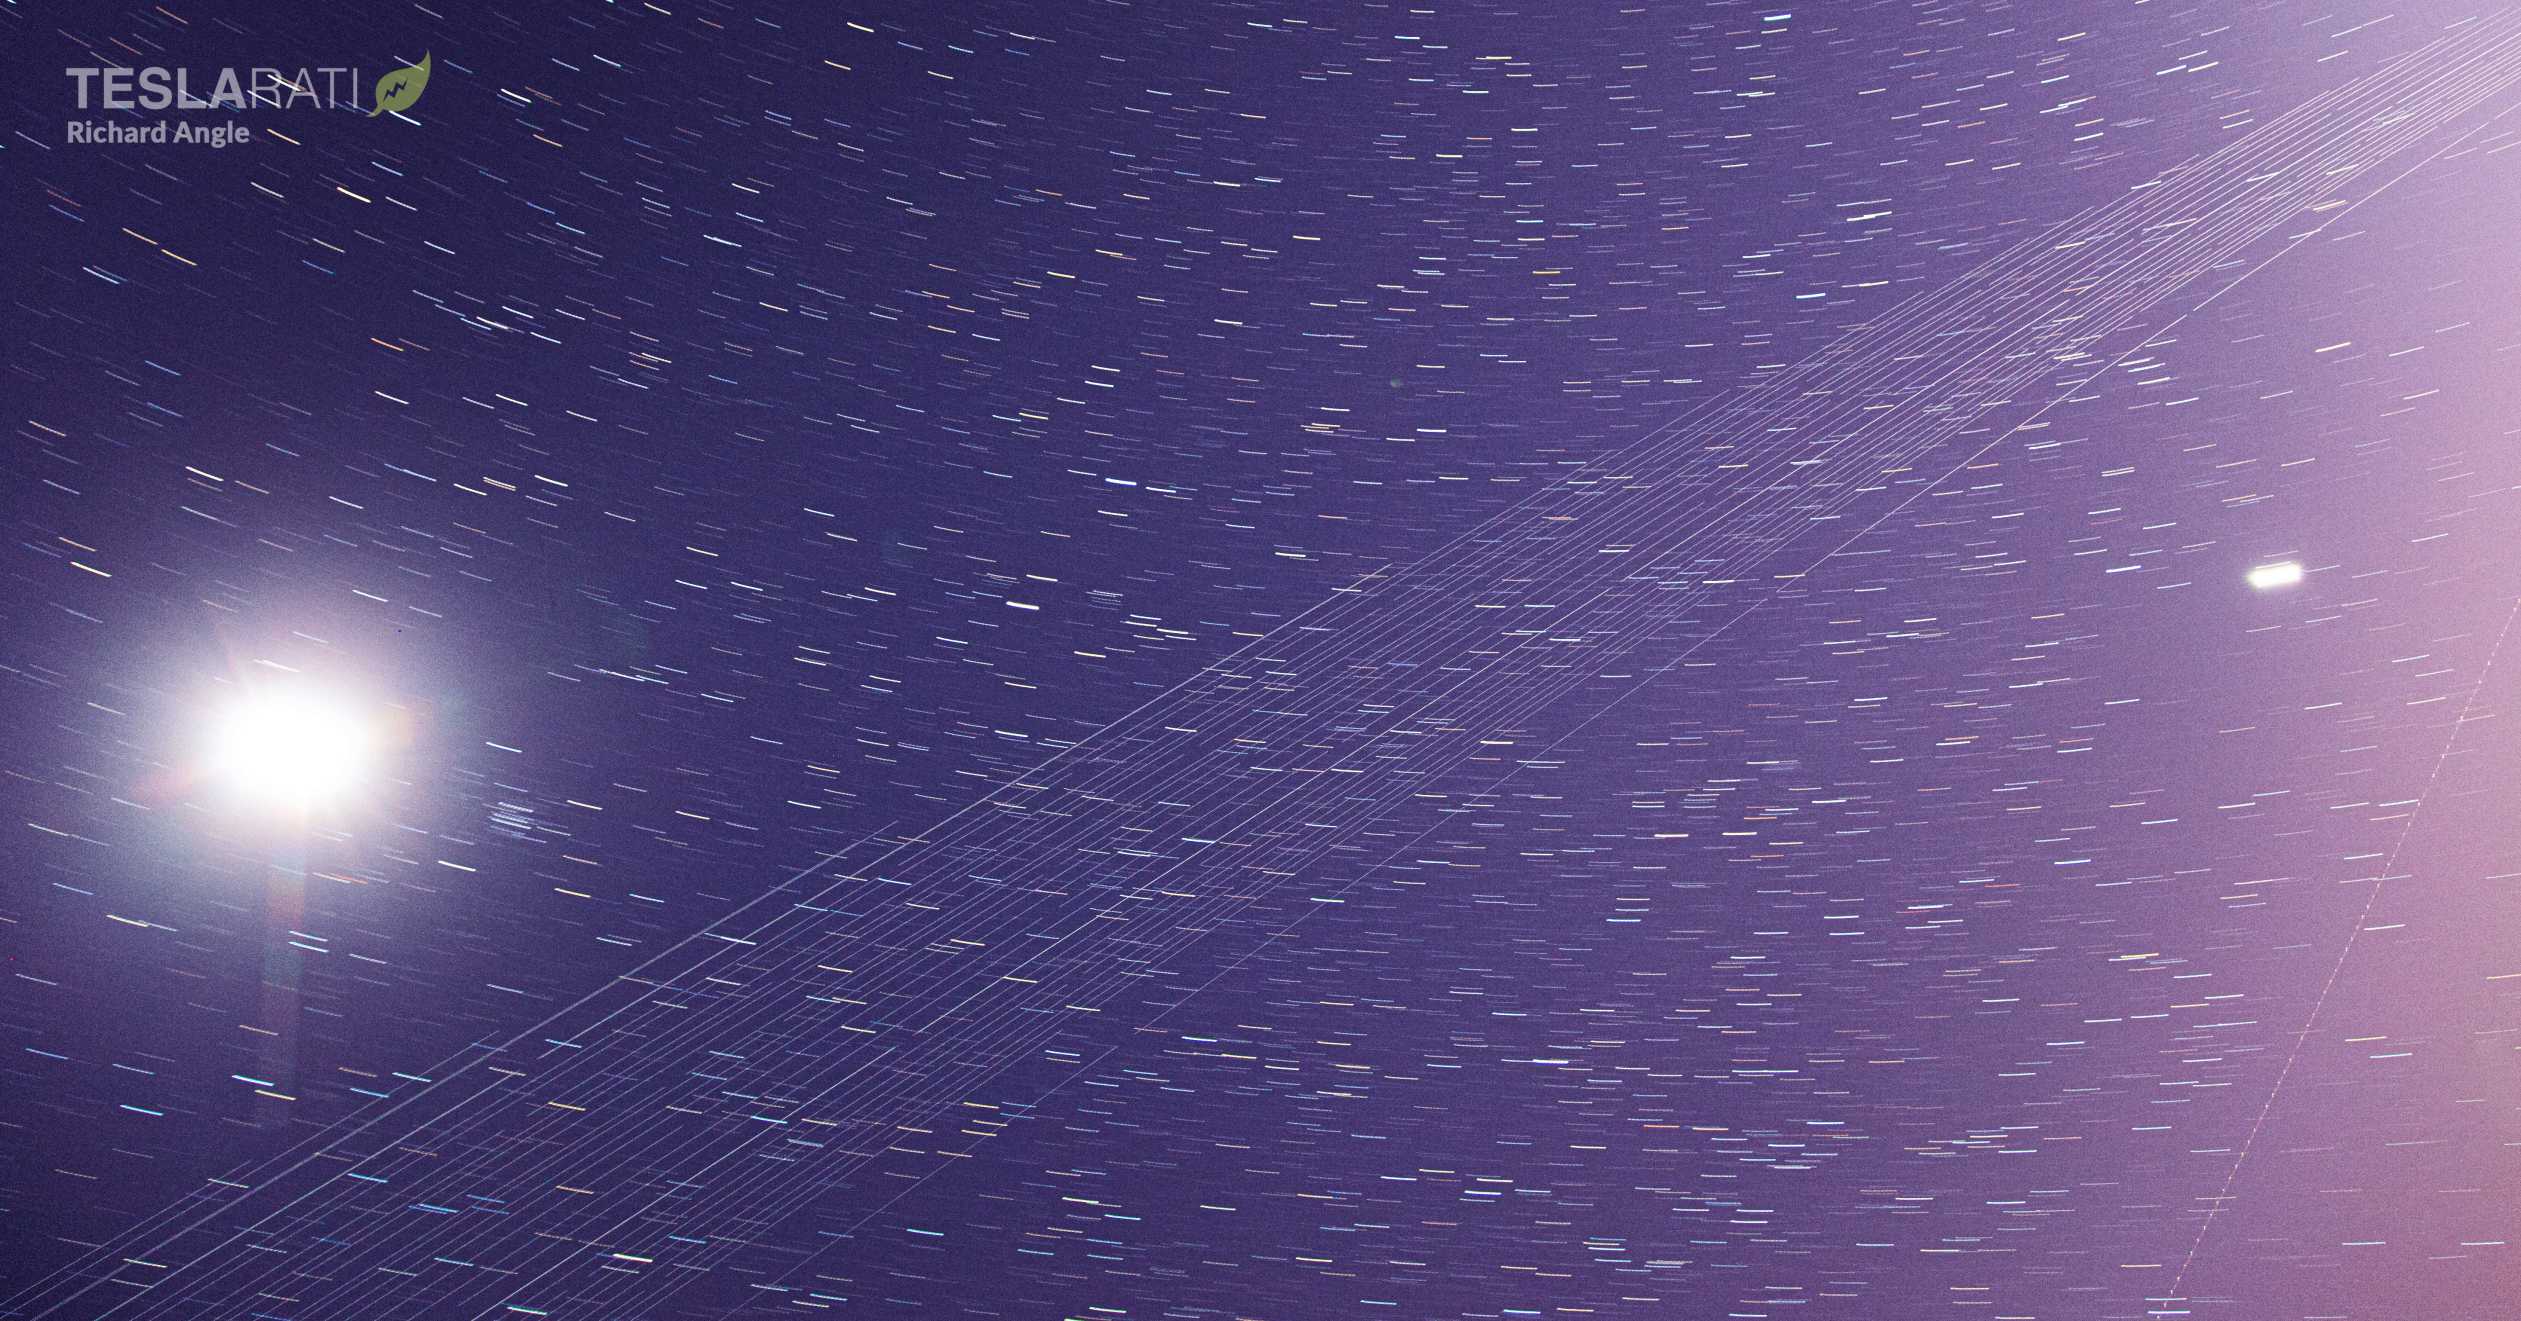 Starlink satellite streak Florida 043020 (Richard Angle) 1 (c)